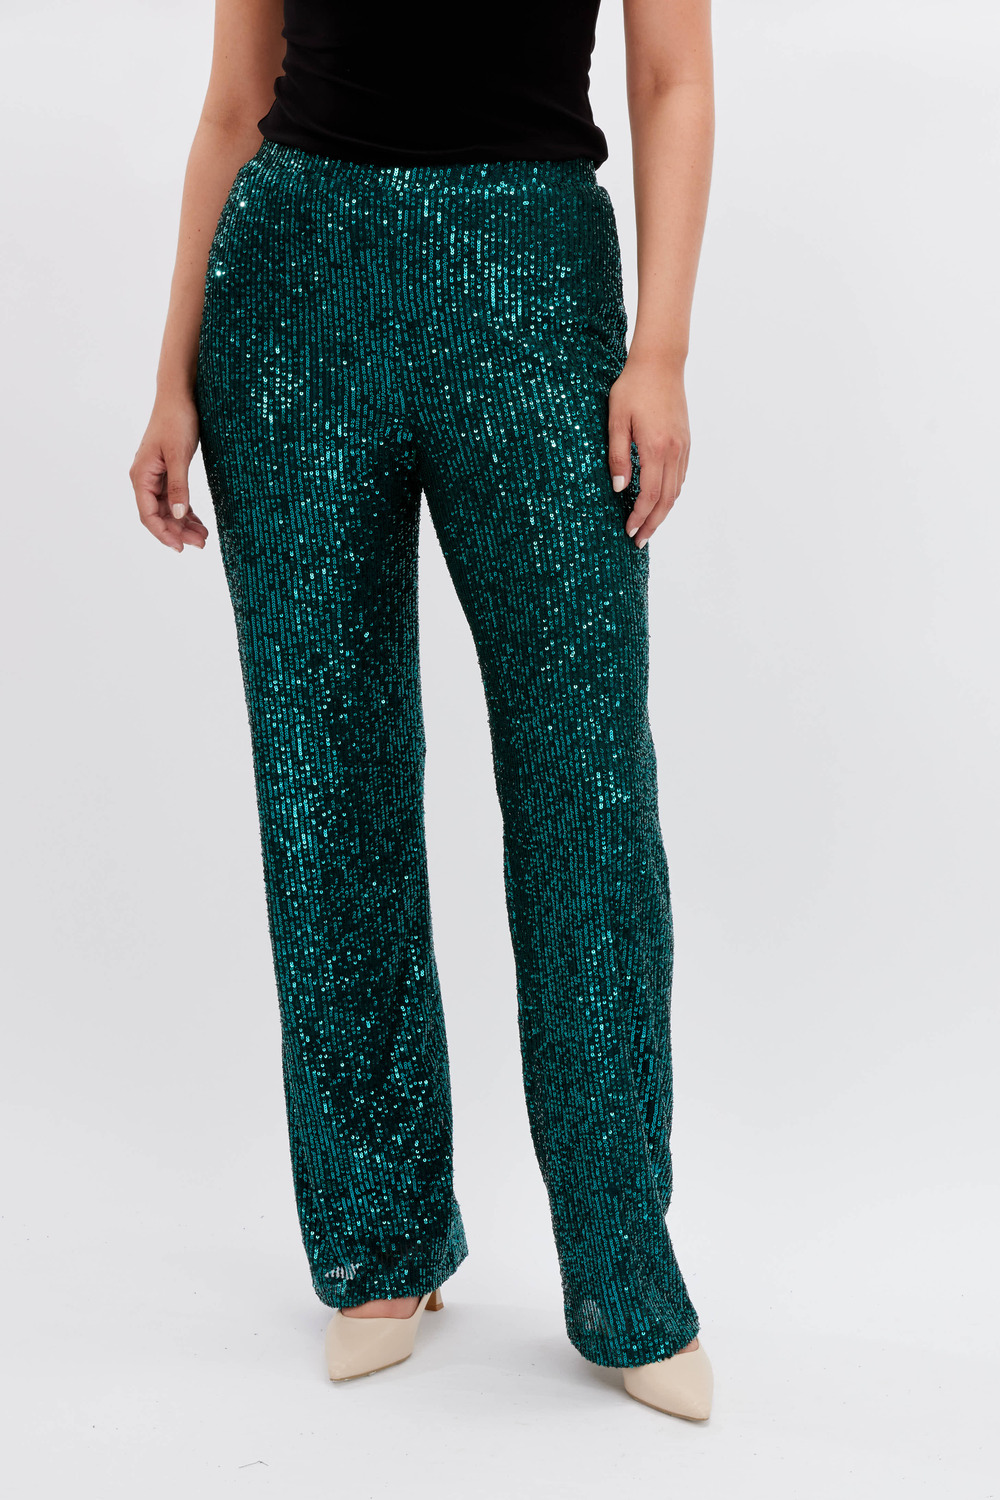 Sequin Wide Leg Pants Style 234245. Emerald